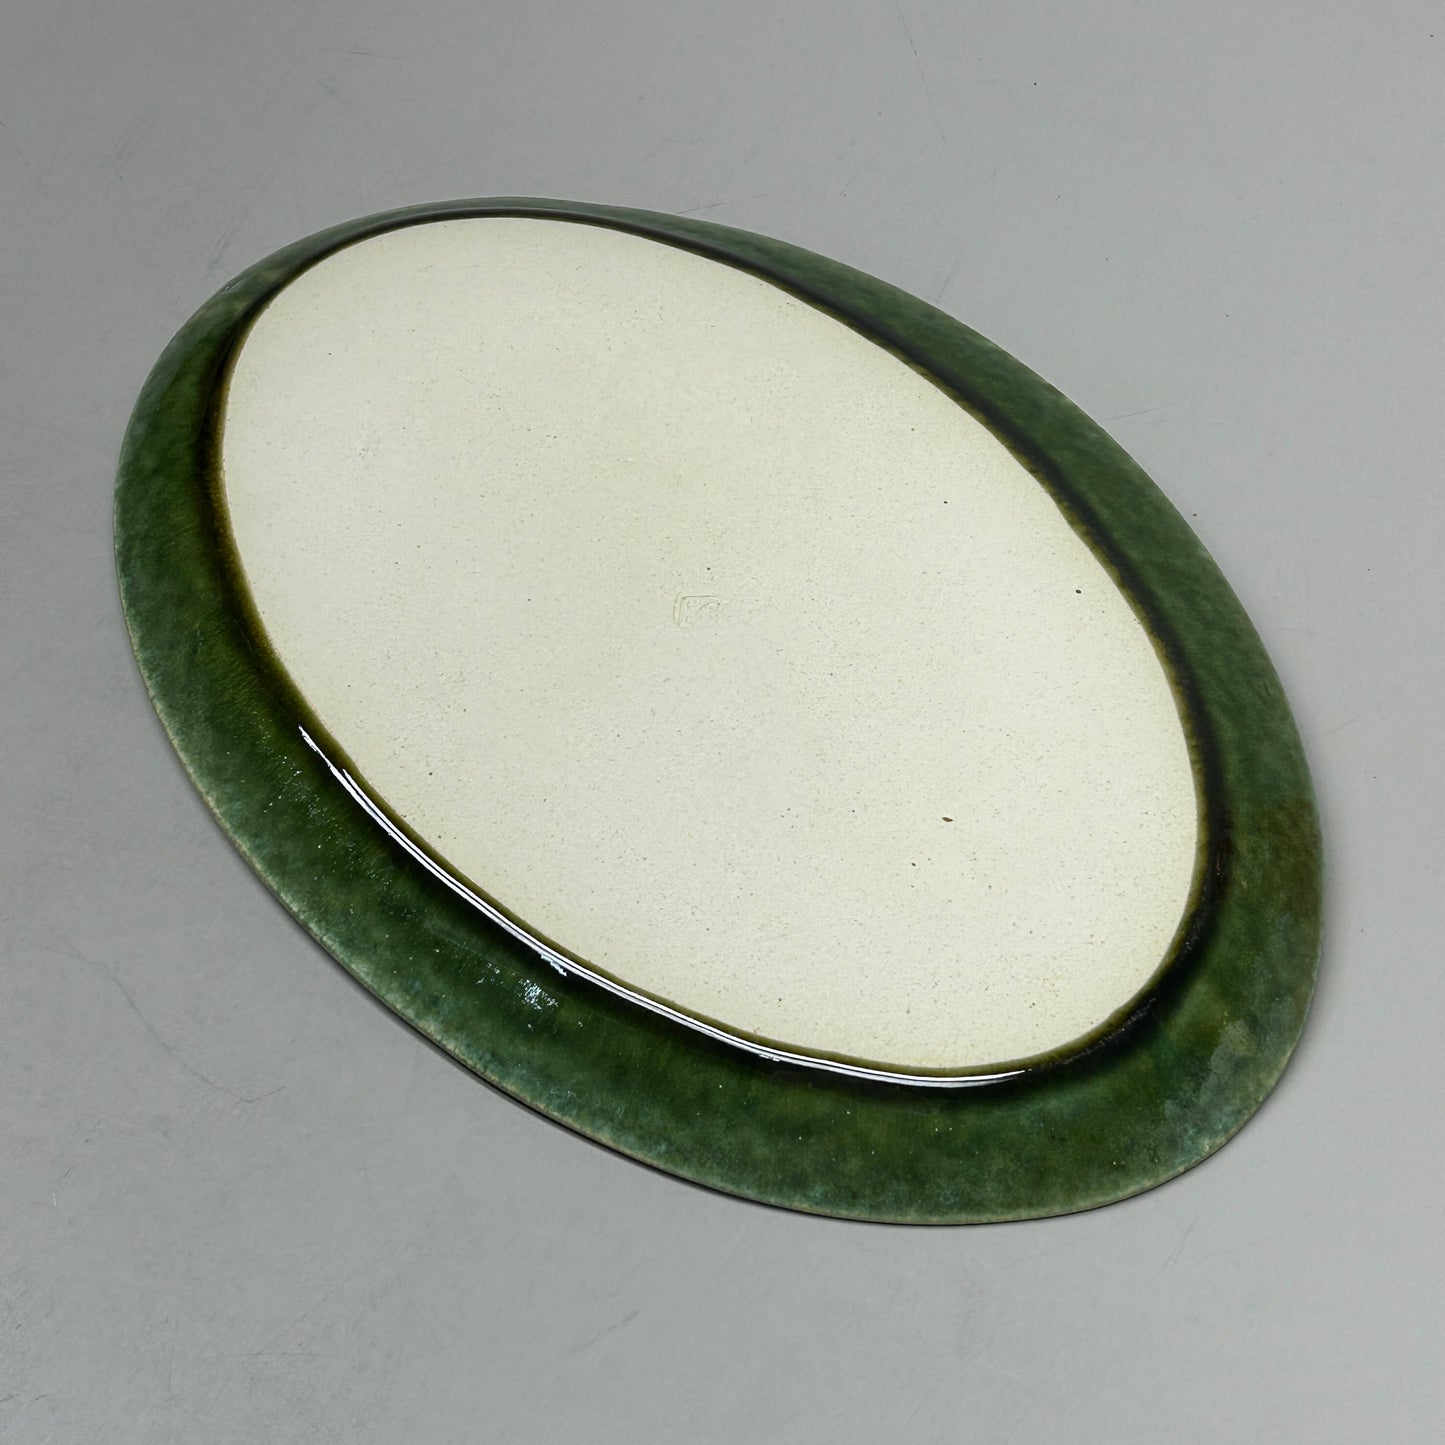 (3 PACK) Glazed Pottery Ceramic Plates Green (New)